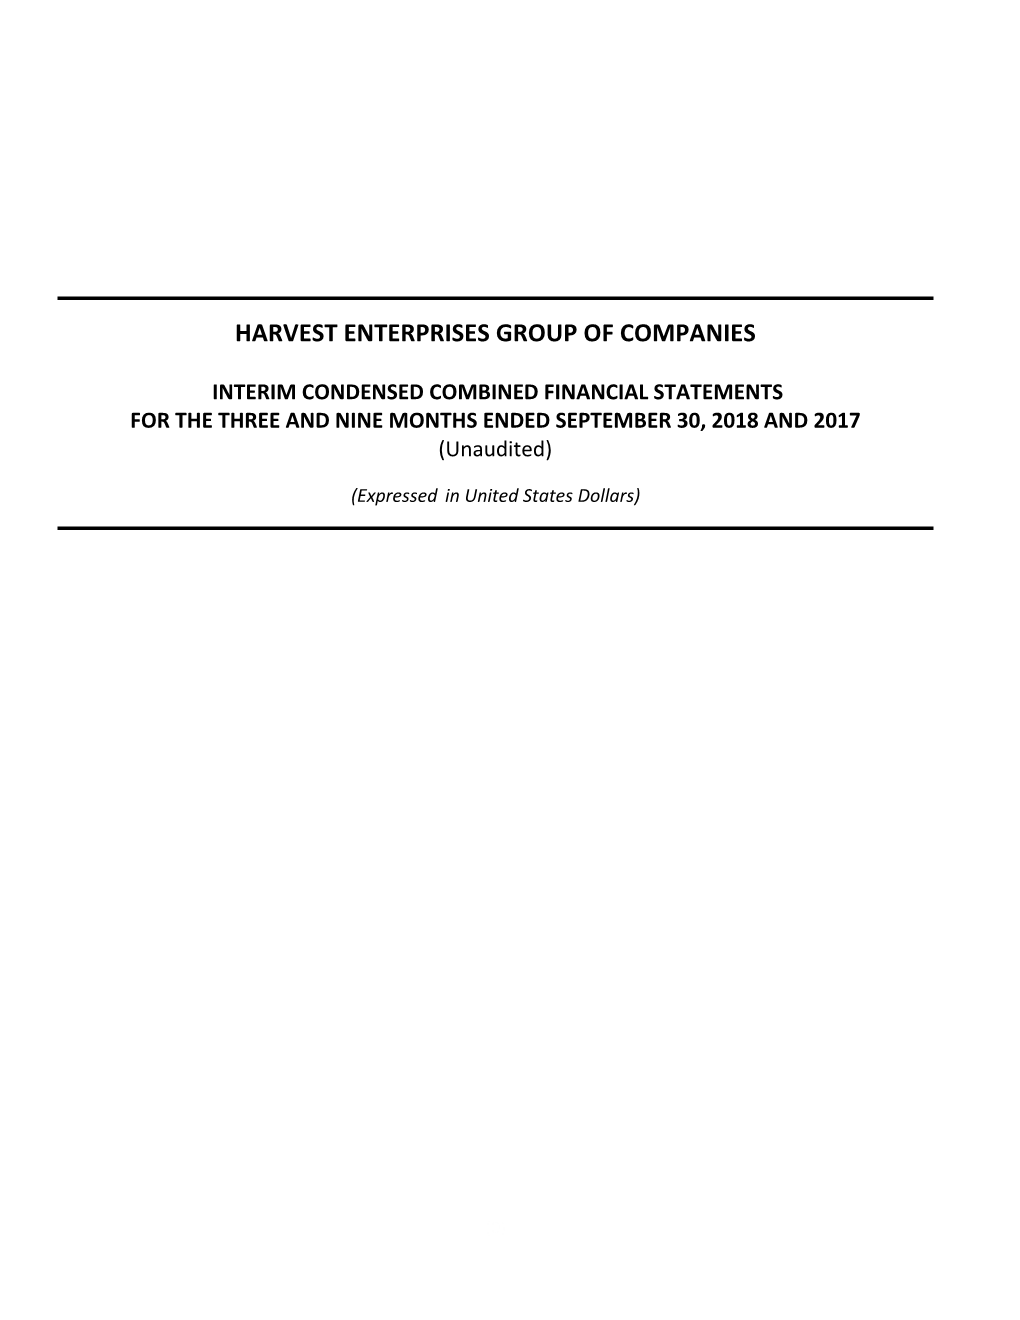 Harvest Enterprises Group of Companies